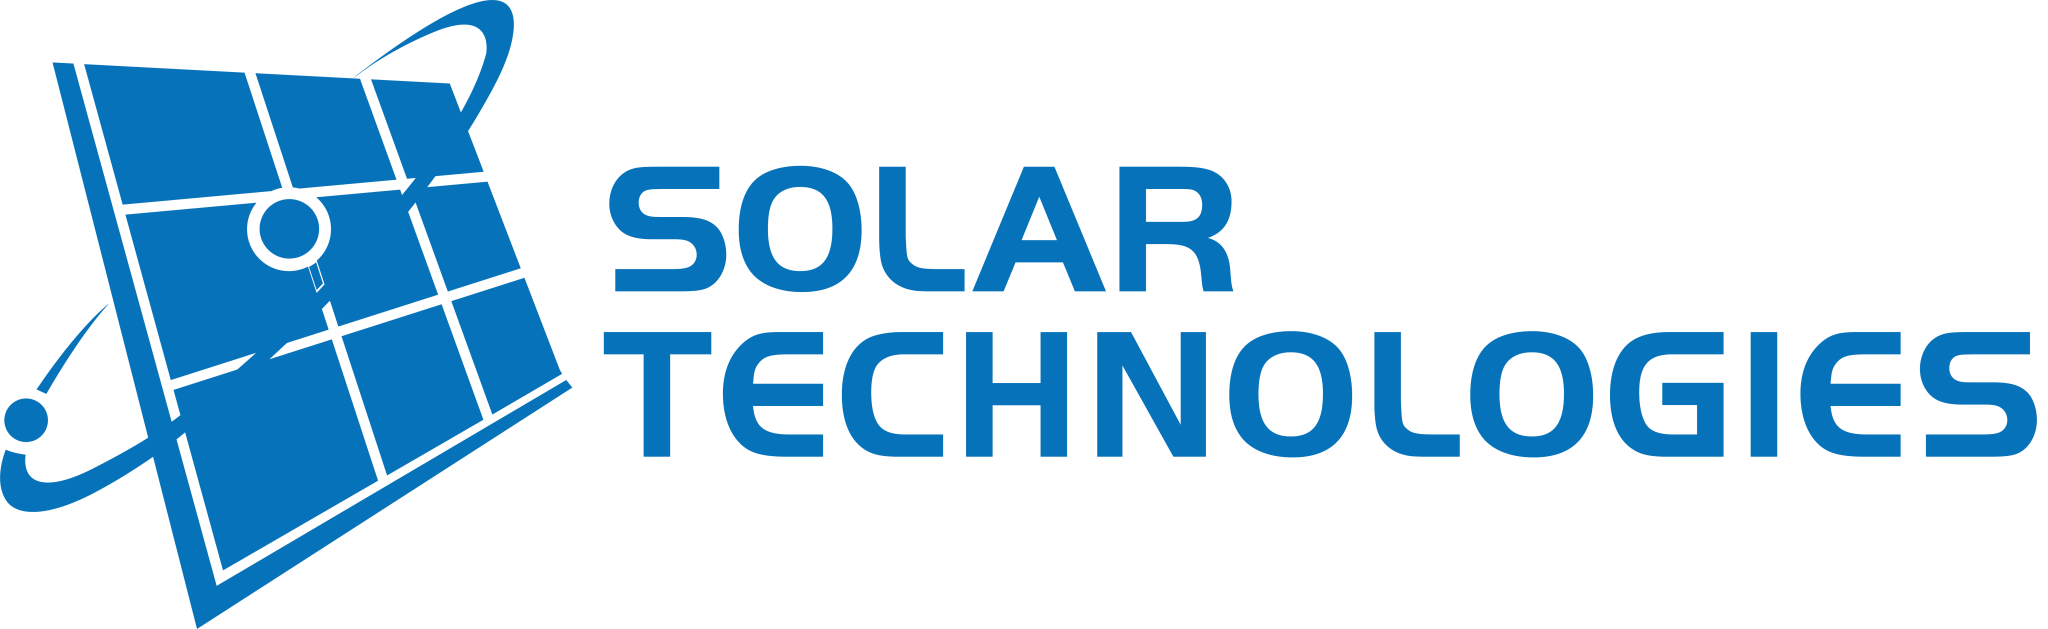 solartech_logo_alone_blue